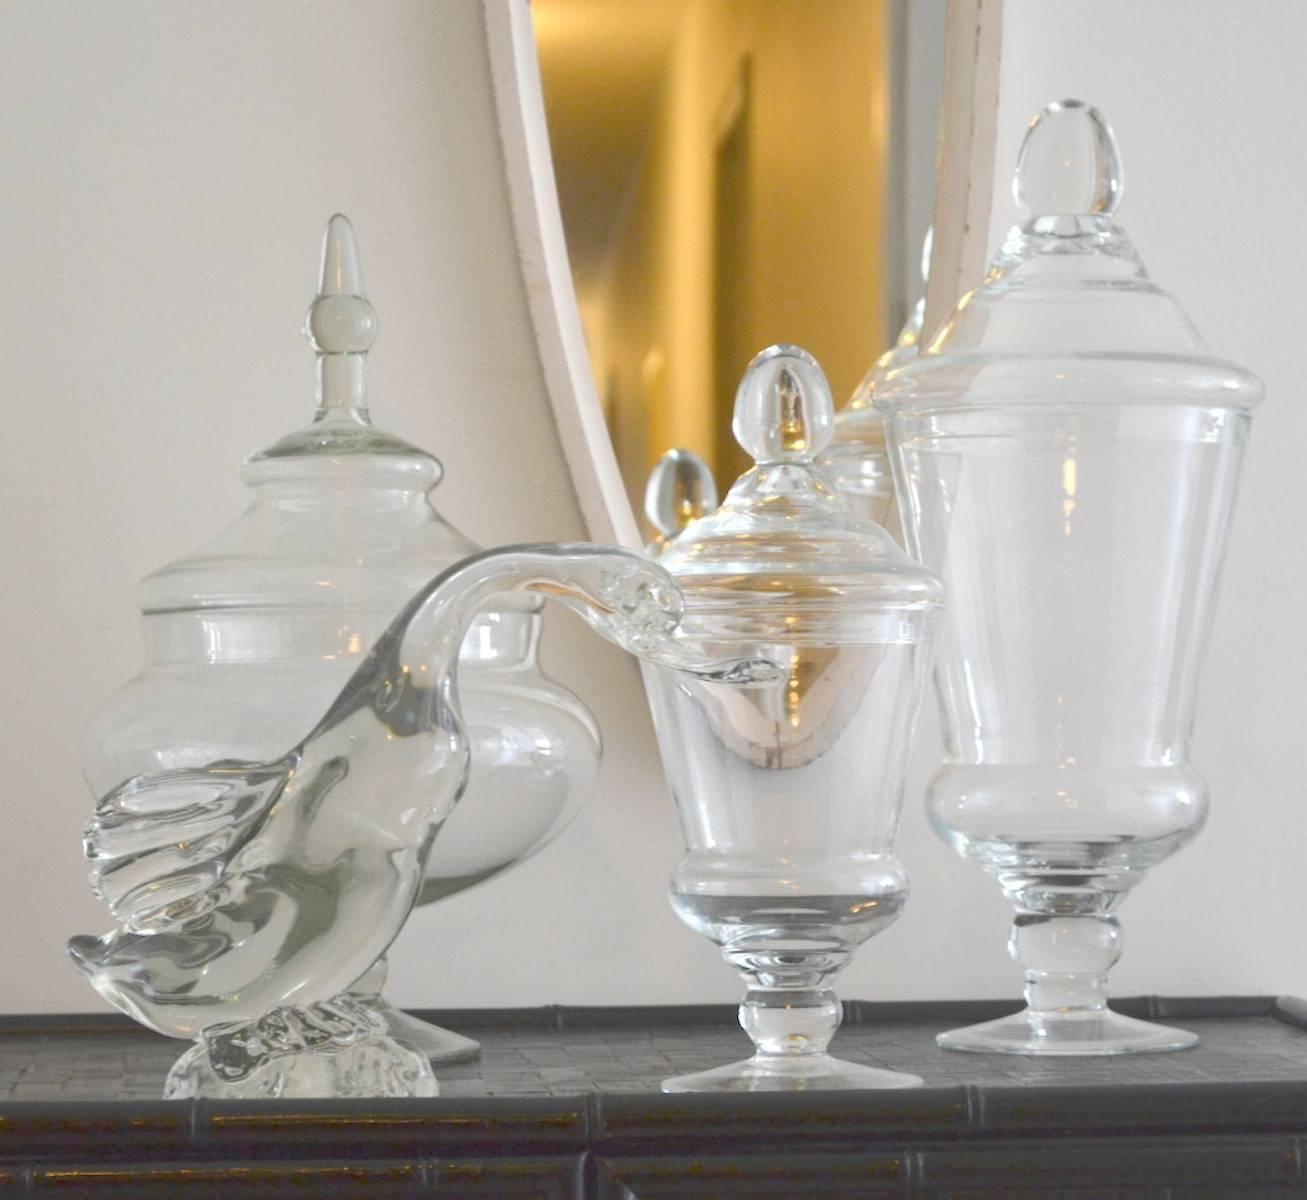 Stunning Mid-Century highly decorative Italian handblown clear glass goose, circa 1950s-1960s.